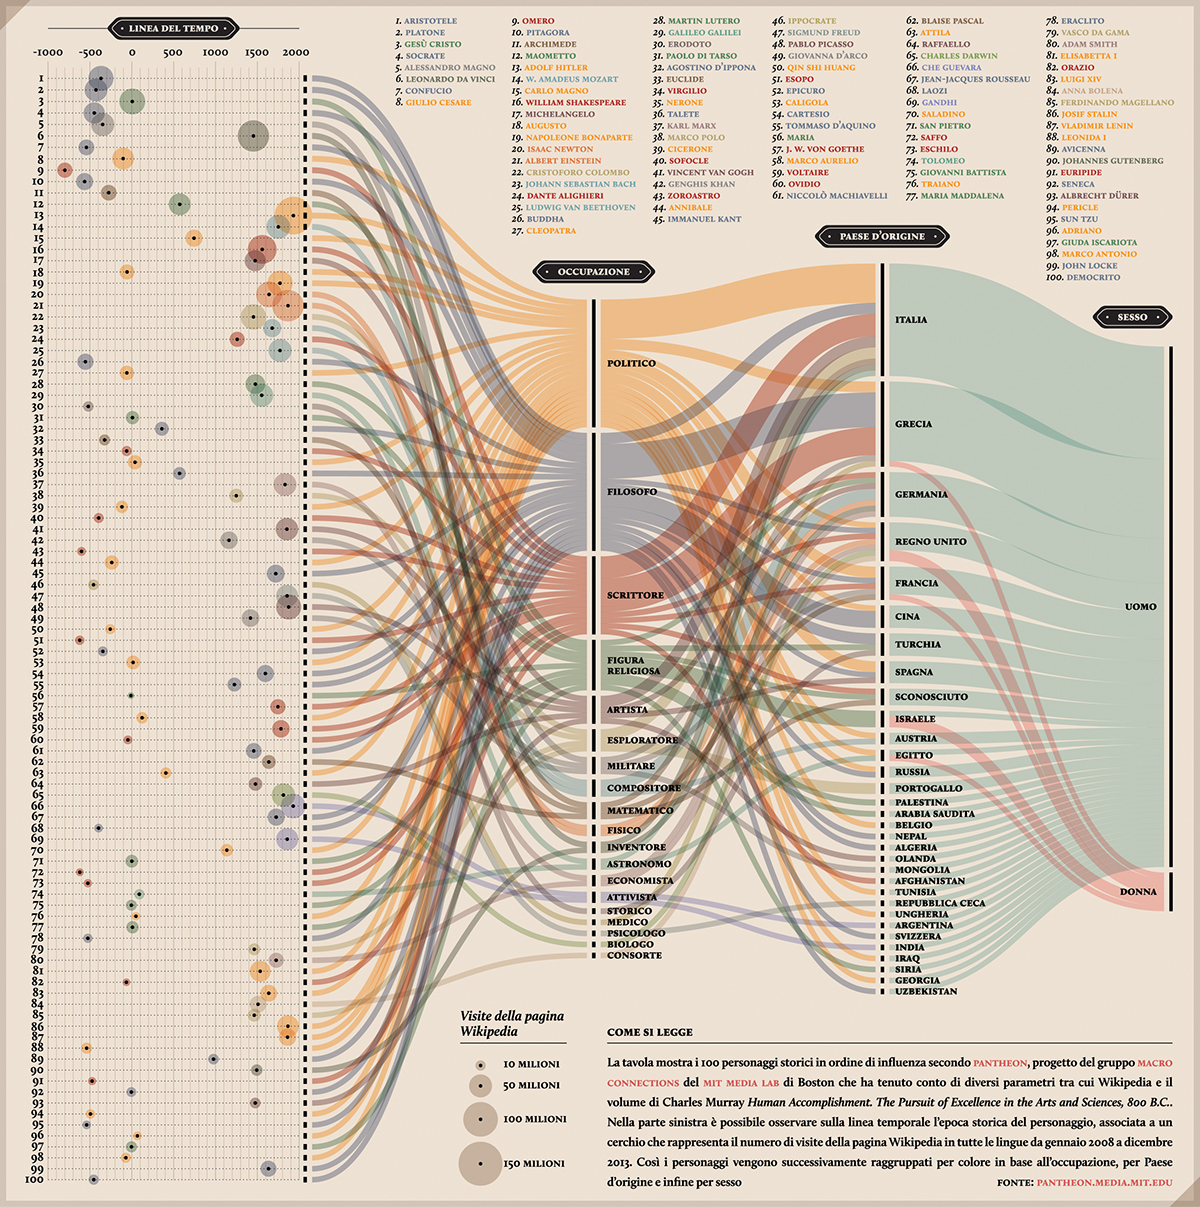 digital digital humanities Data visualization infographic Pantheon MIT boston mit medialab rank philosophy  science DH information design diagram